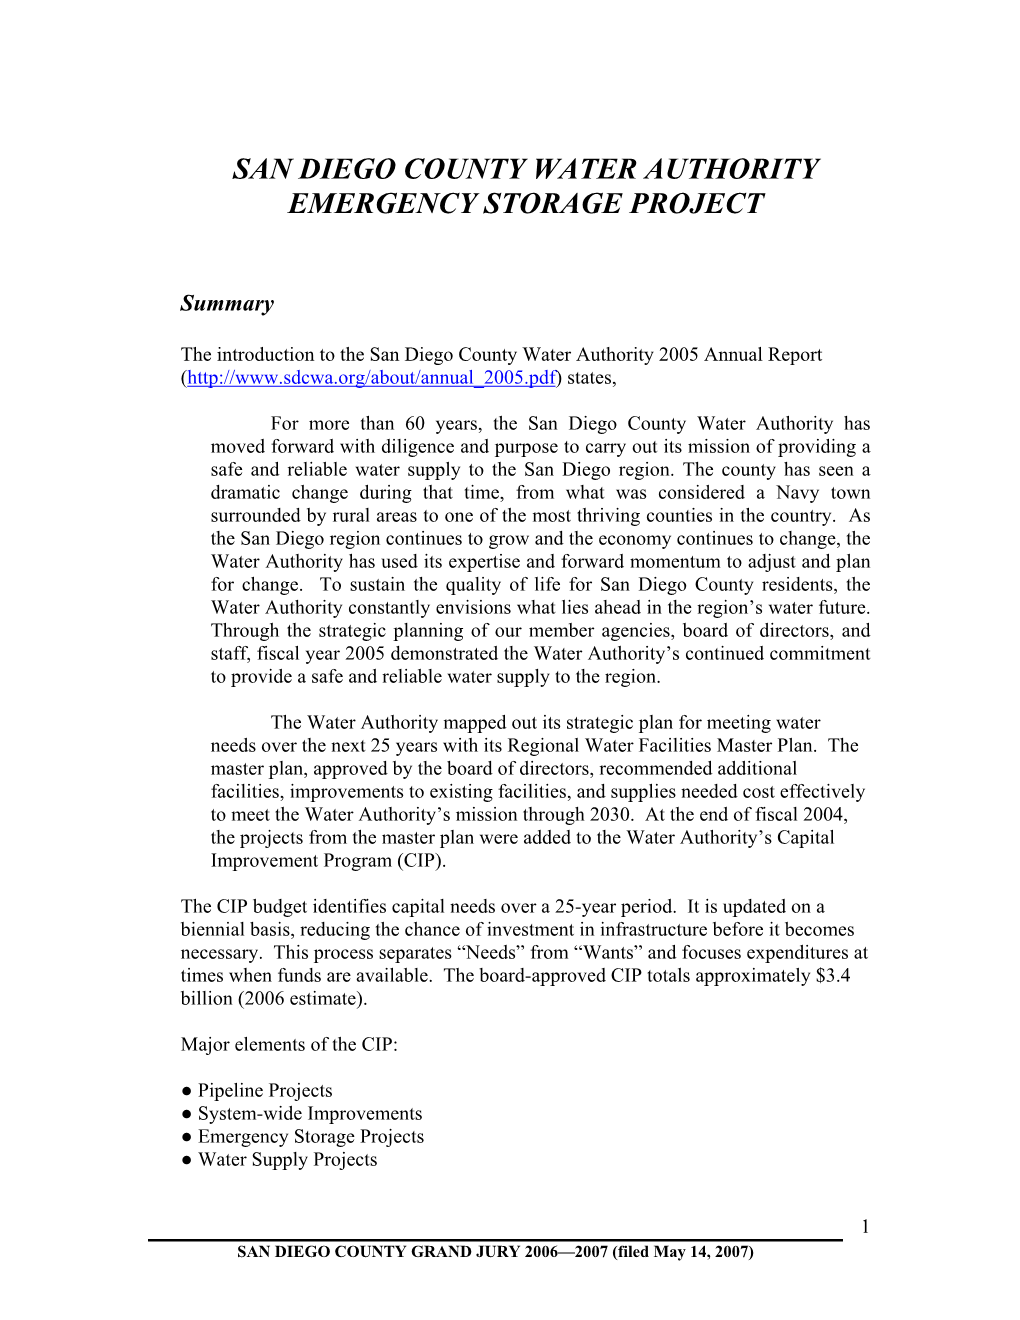 San Diego County Water Authority Emergency Storage Project